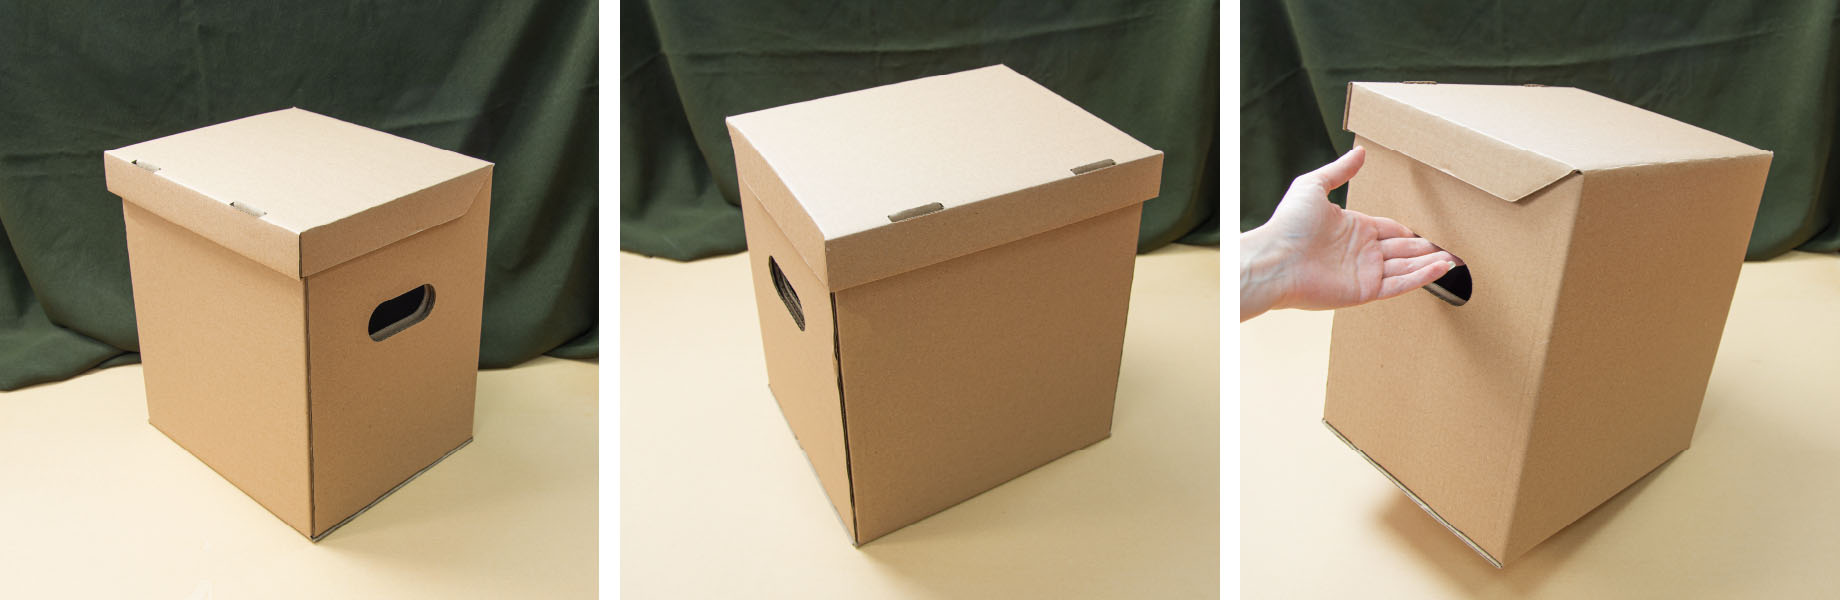 Коробка картонная архивная ( Архивный короб)